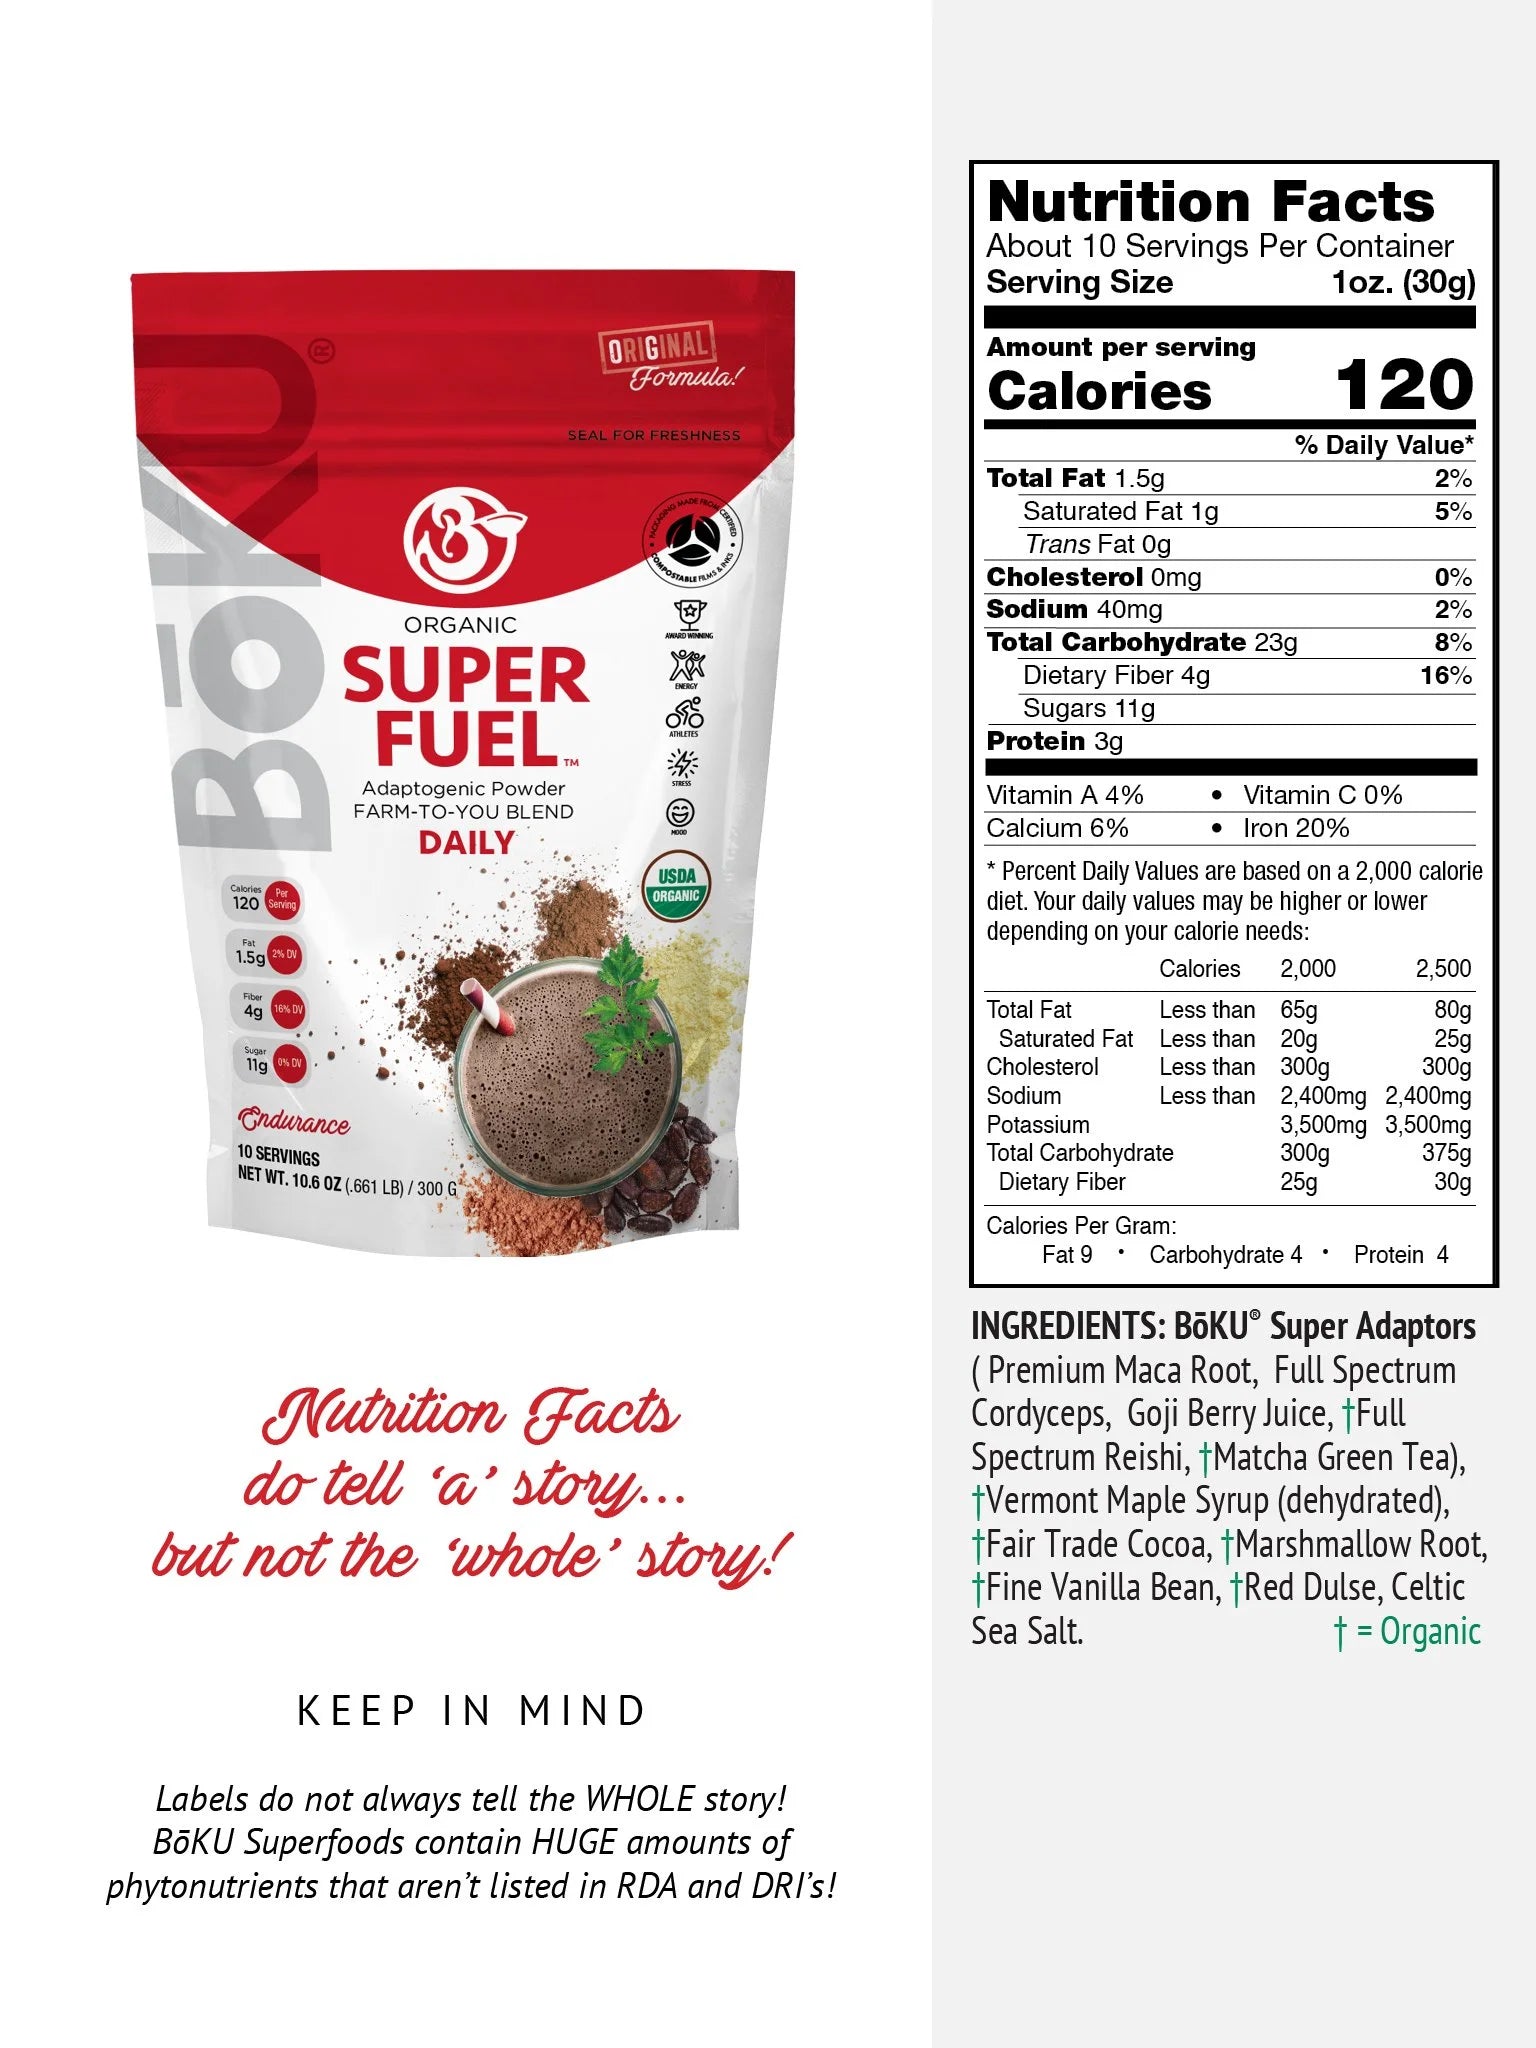 Super Fuel sakara metabolism powder pre workout powder organic preworkout powder